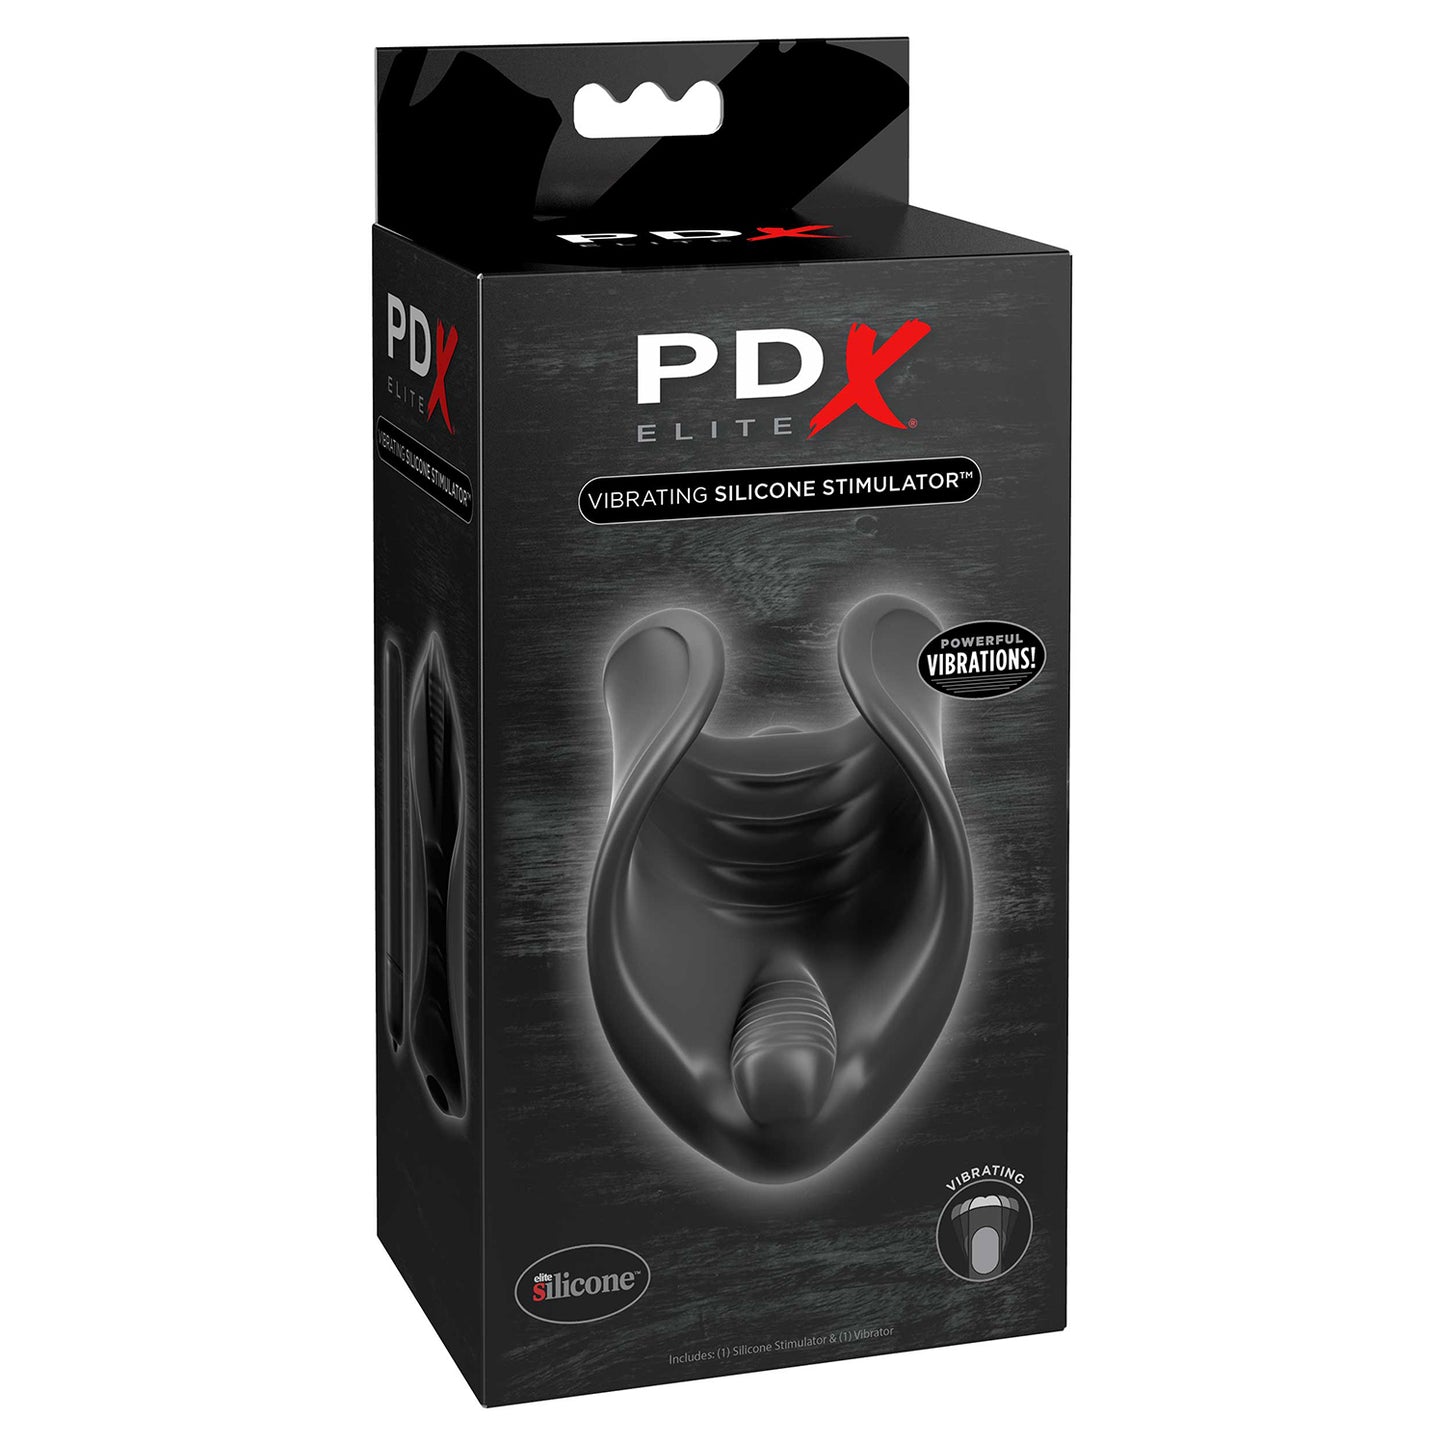 PDX Elite Vibrating Silicone Stimulator - Black - Thorn & Feather